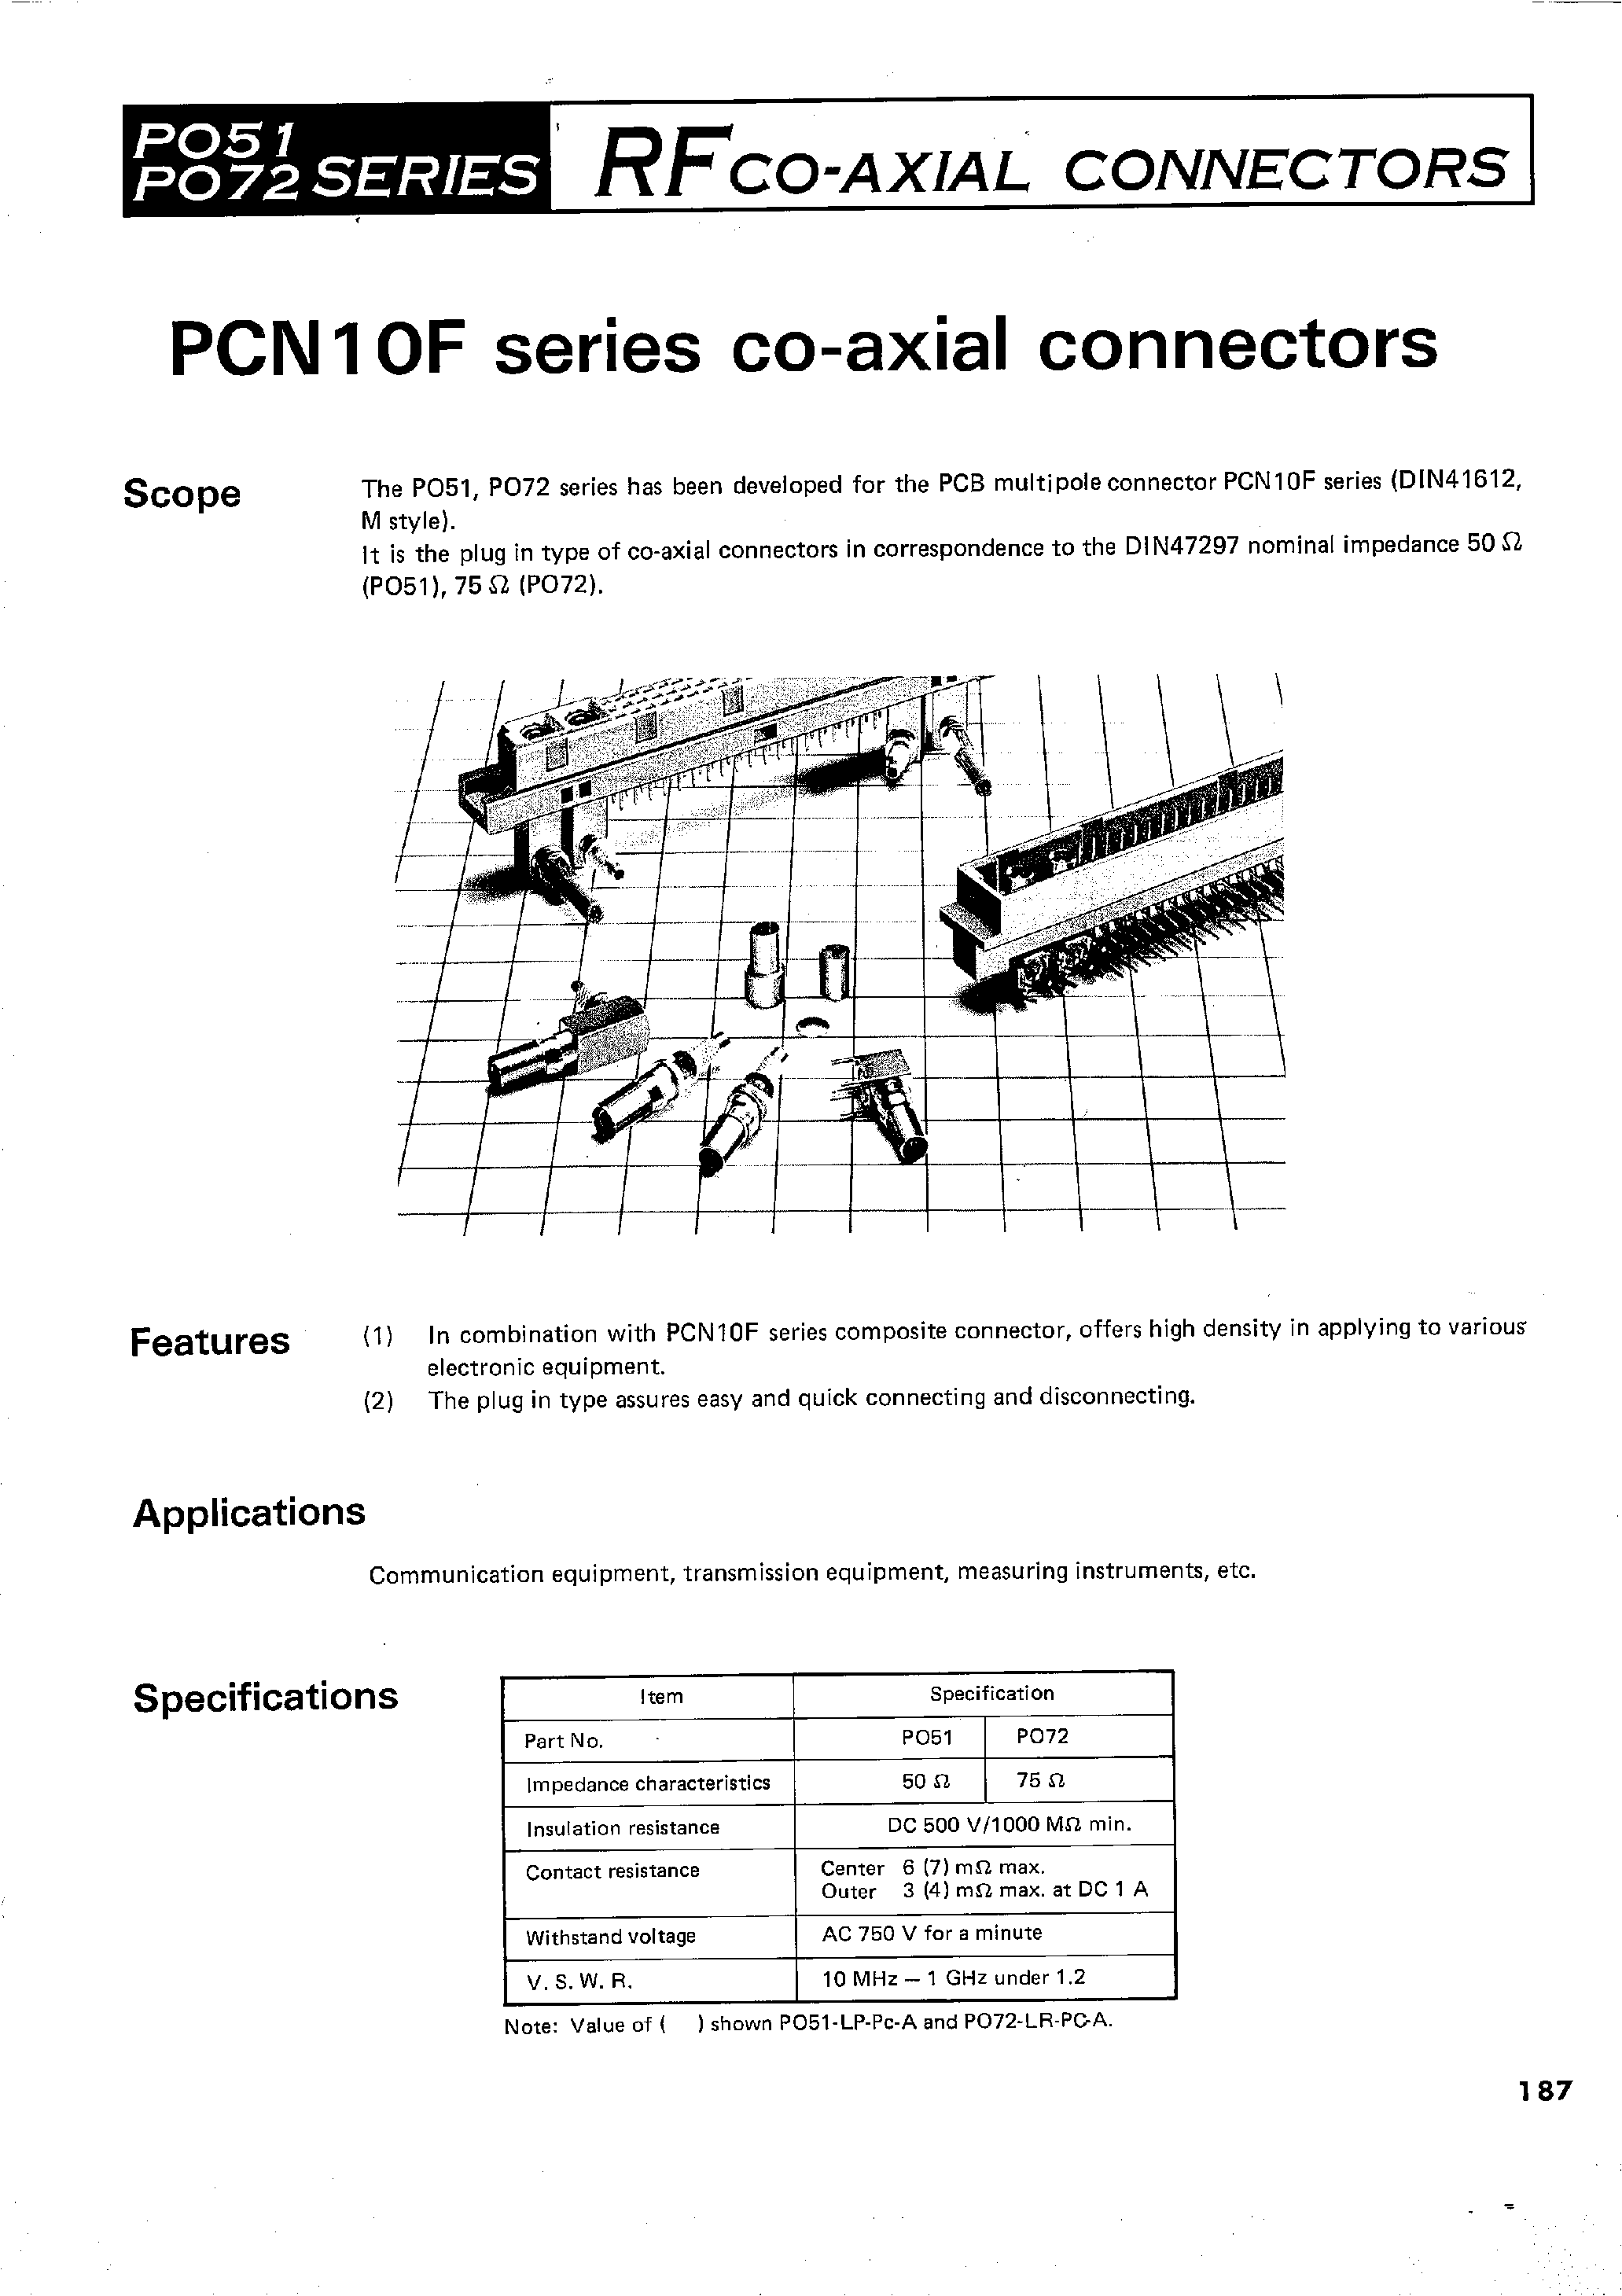 Даташит PO51J-T-1 - RFCO-AXIAL CONNECTORS страница 1